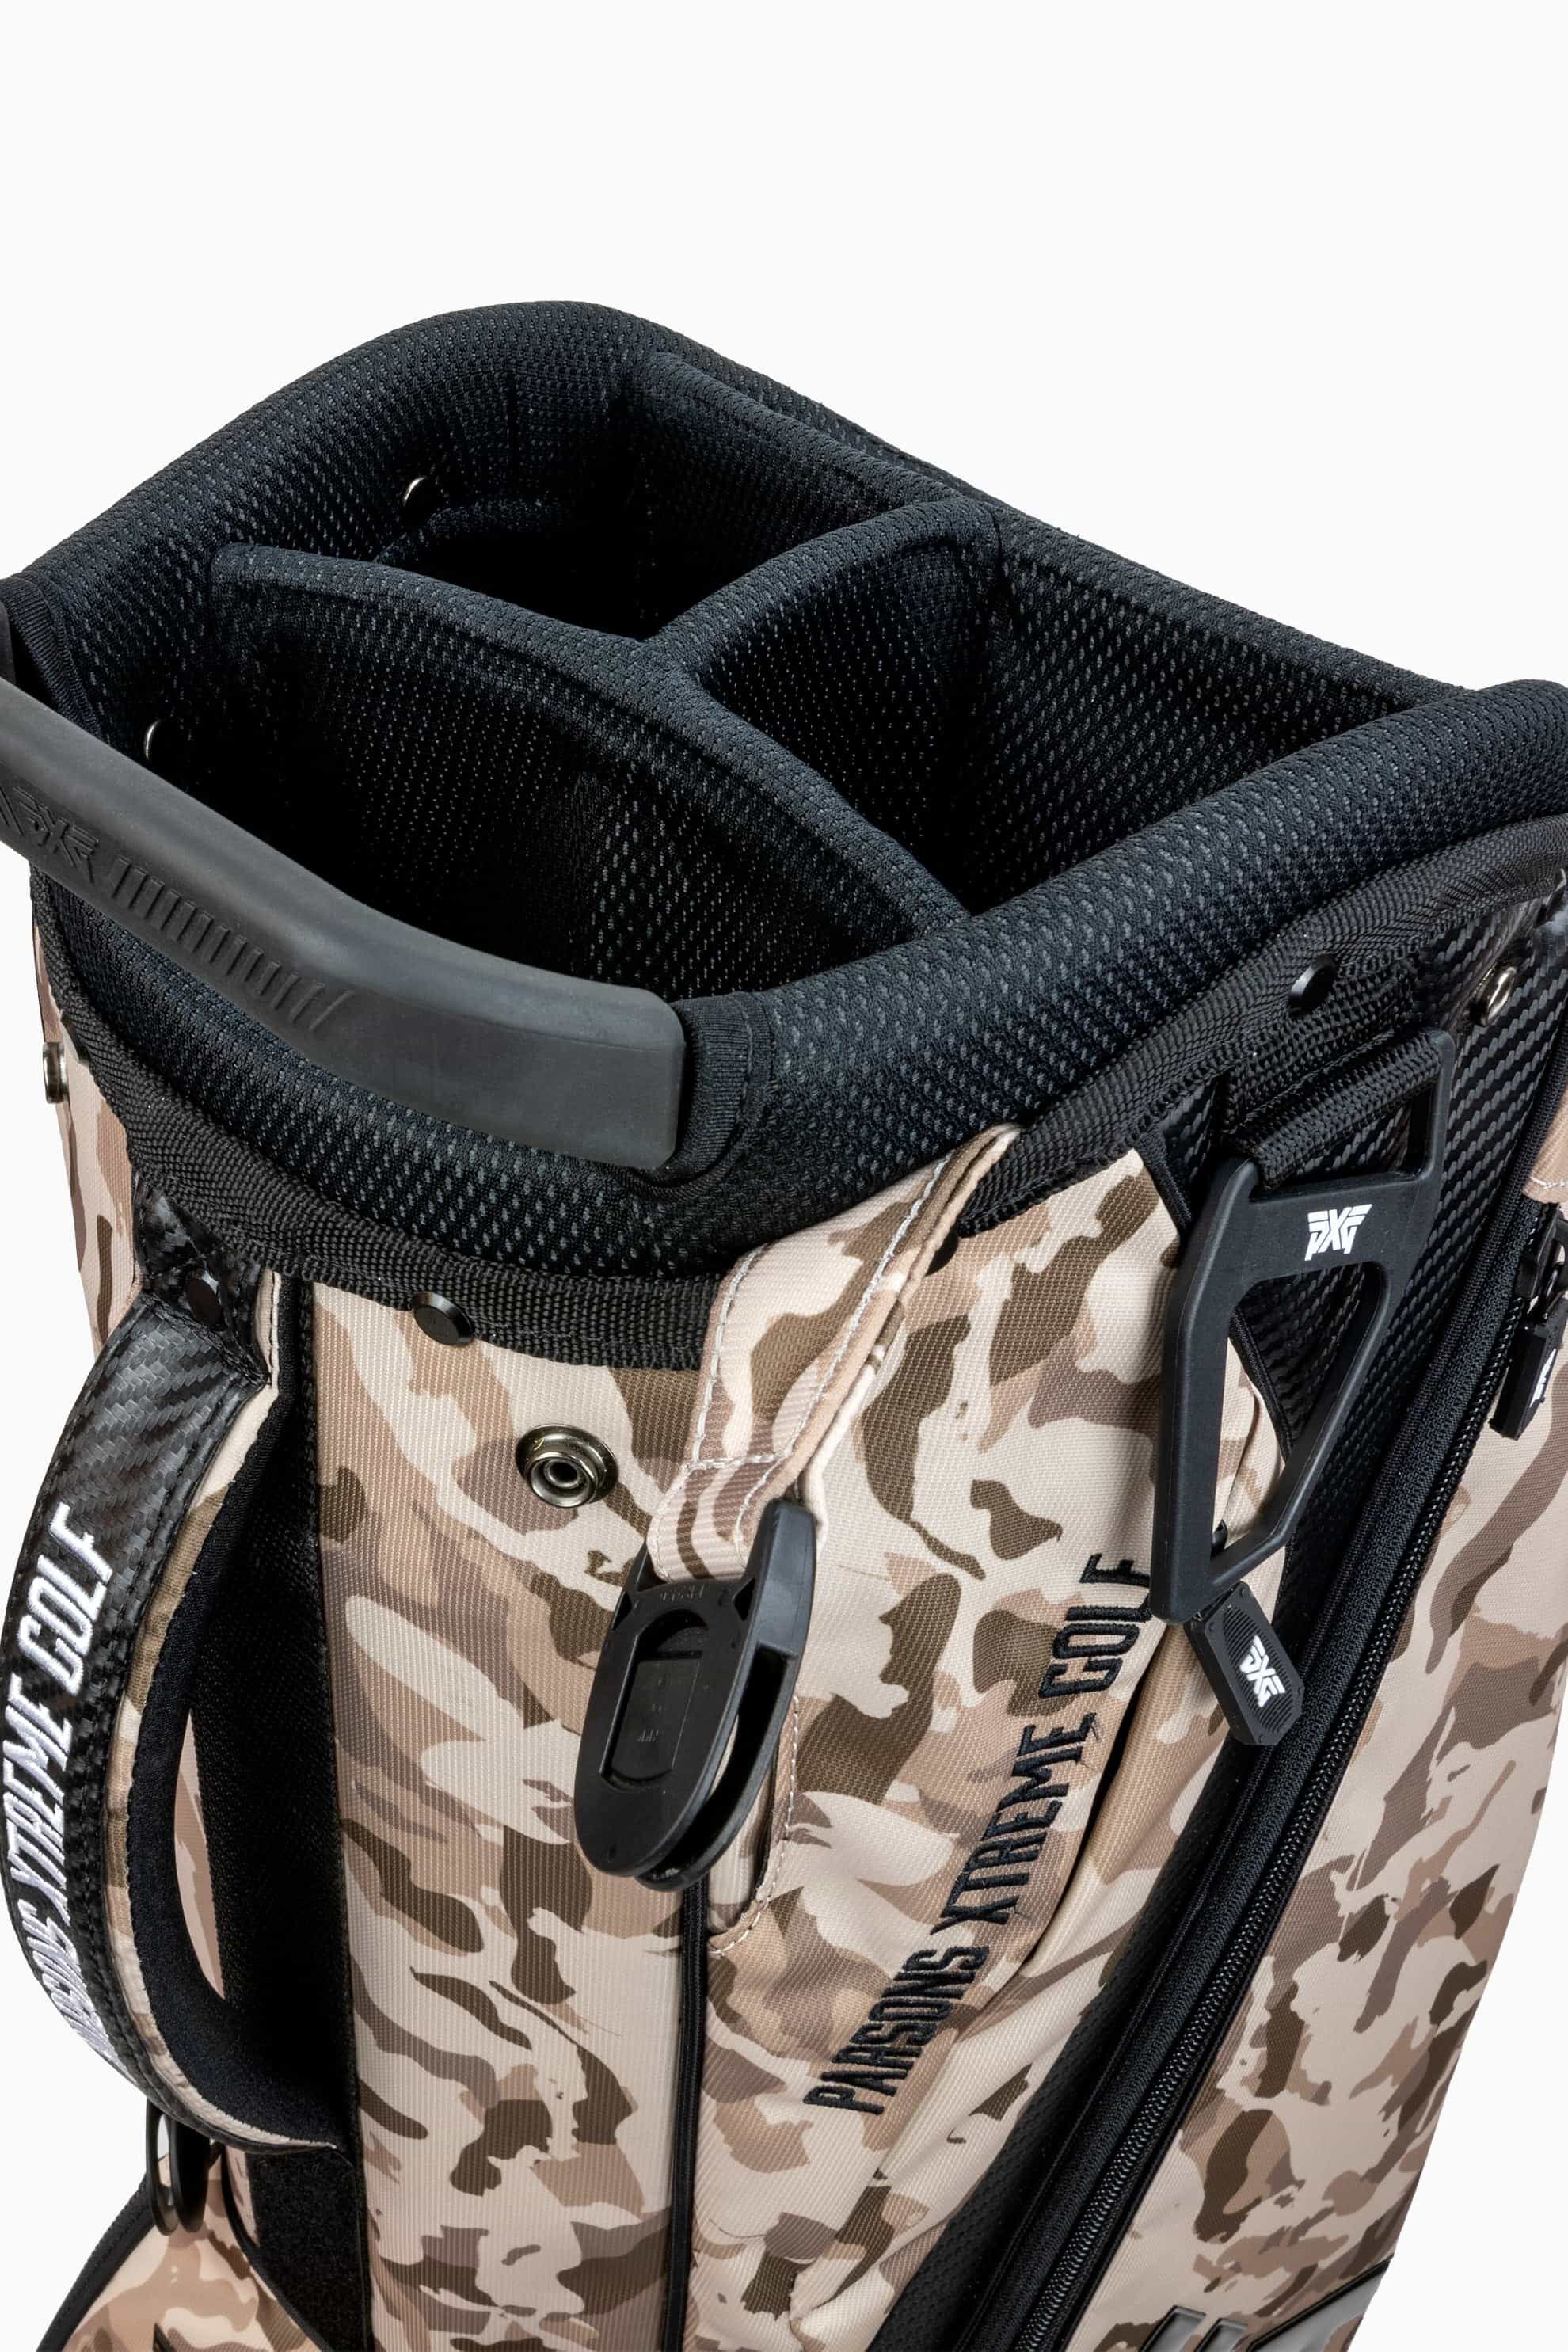 Buy Desert Tan Fairway Camo Carry Stand Bag  PXG